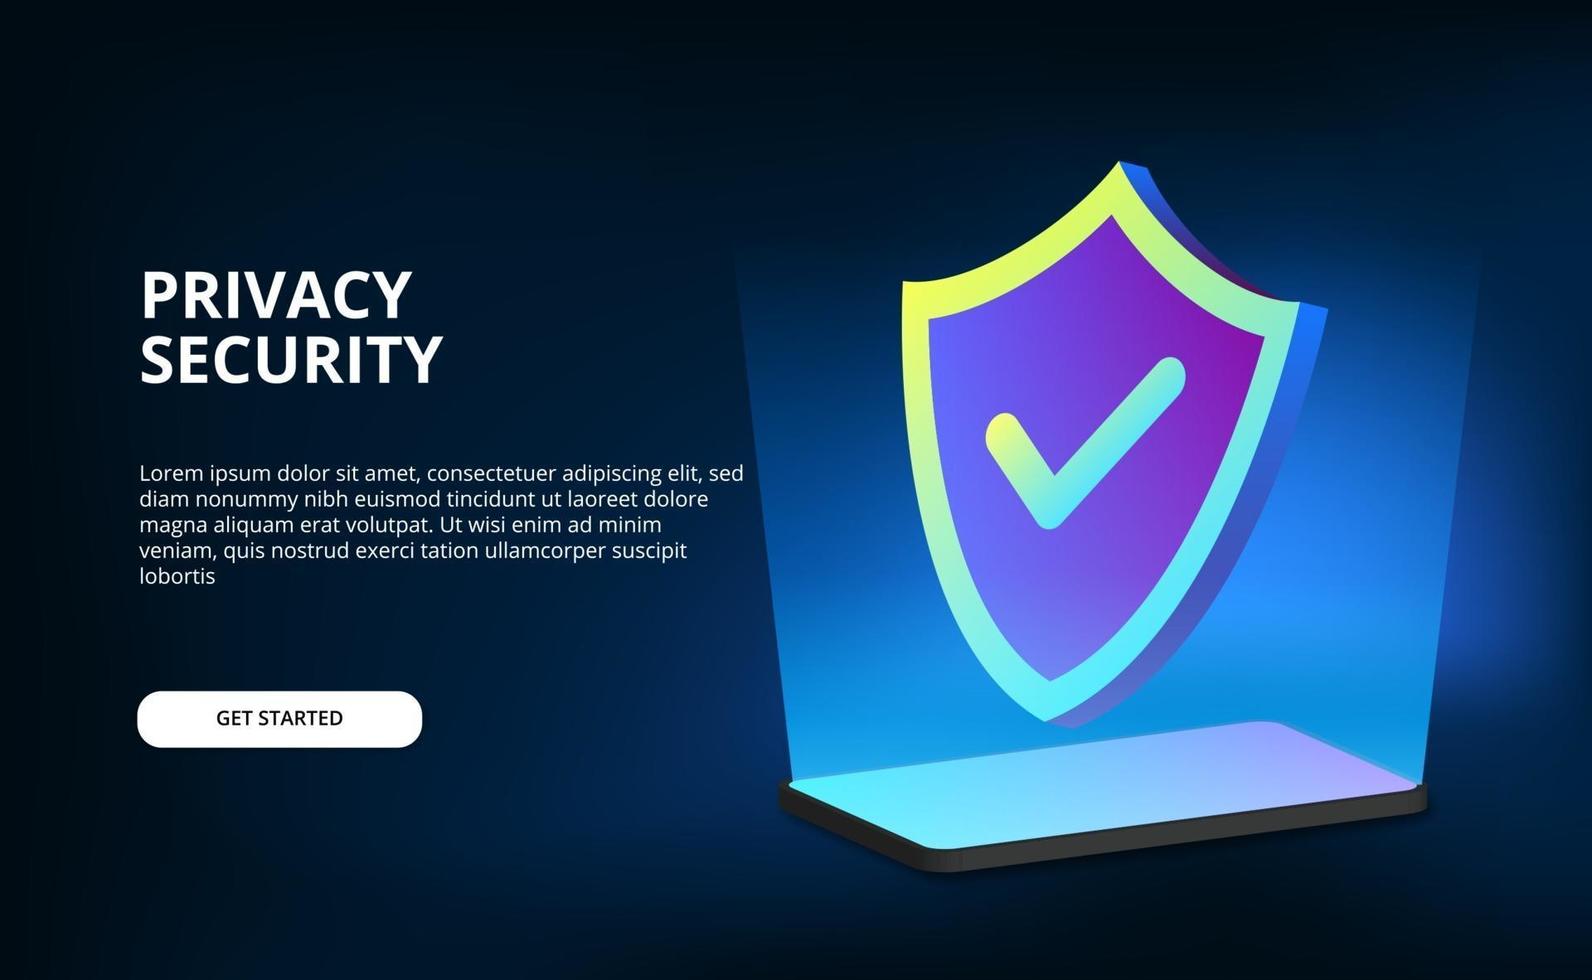 Protección de privacidad de seguridad de escudo 3d para teléfono, computadora, tecnología de internet, cibernético con fondo oscuro vector